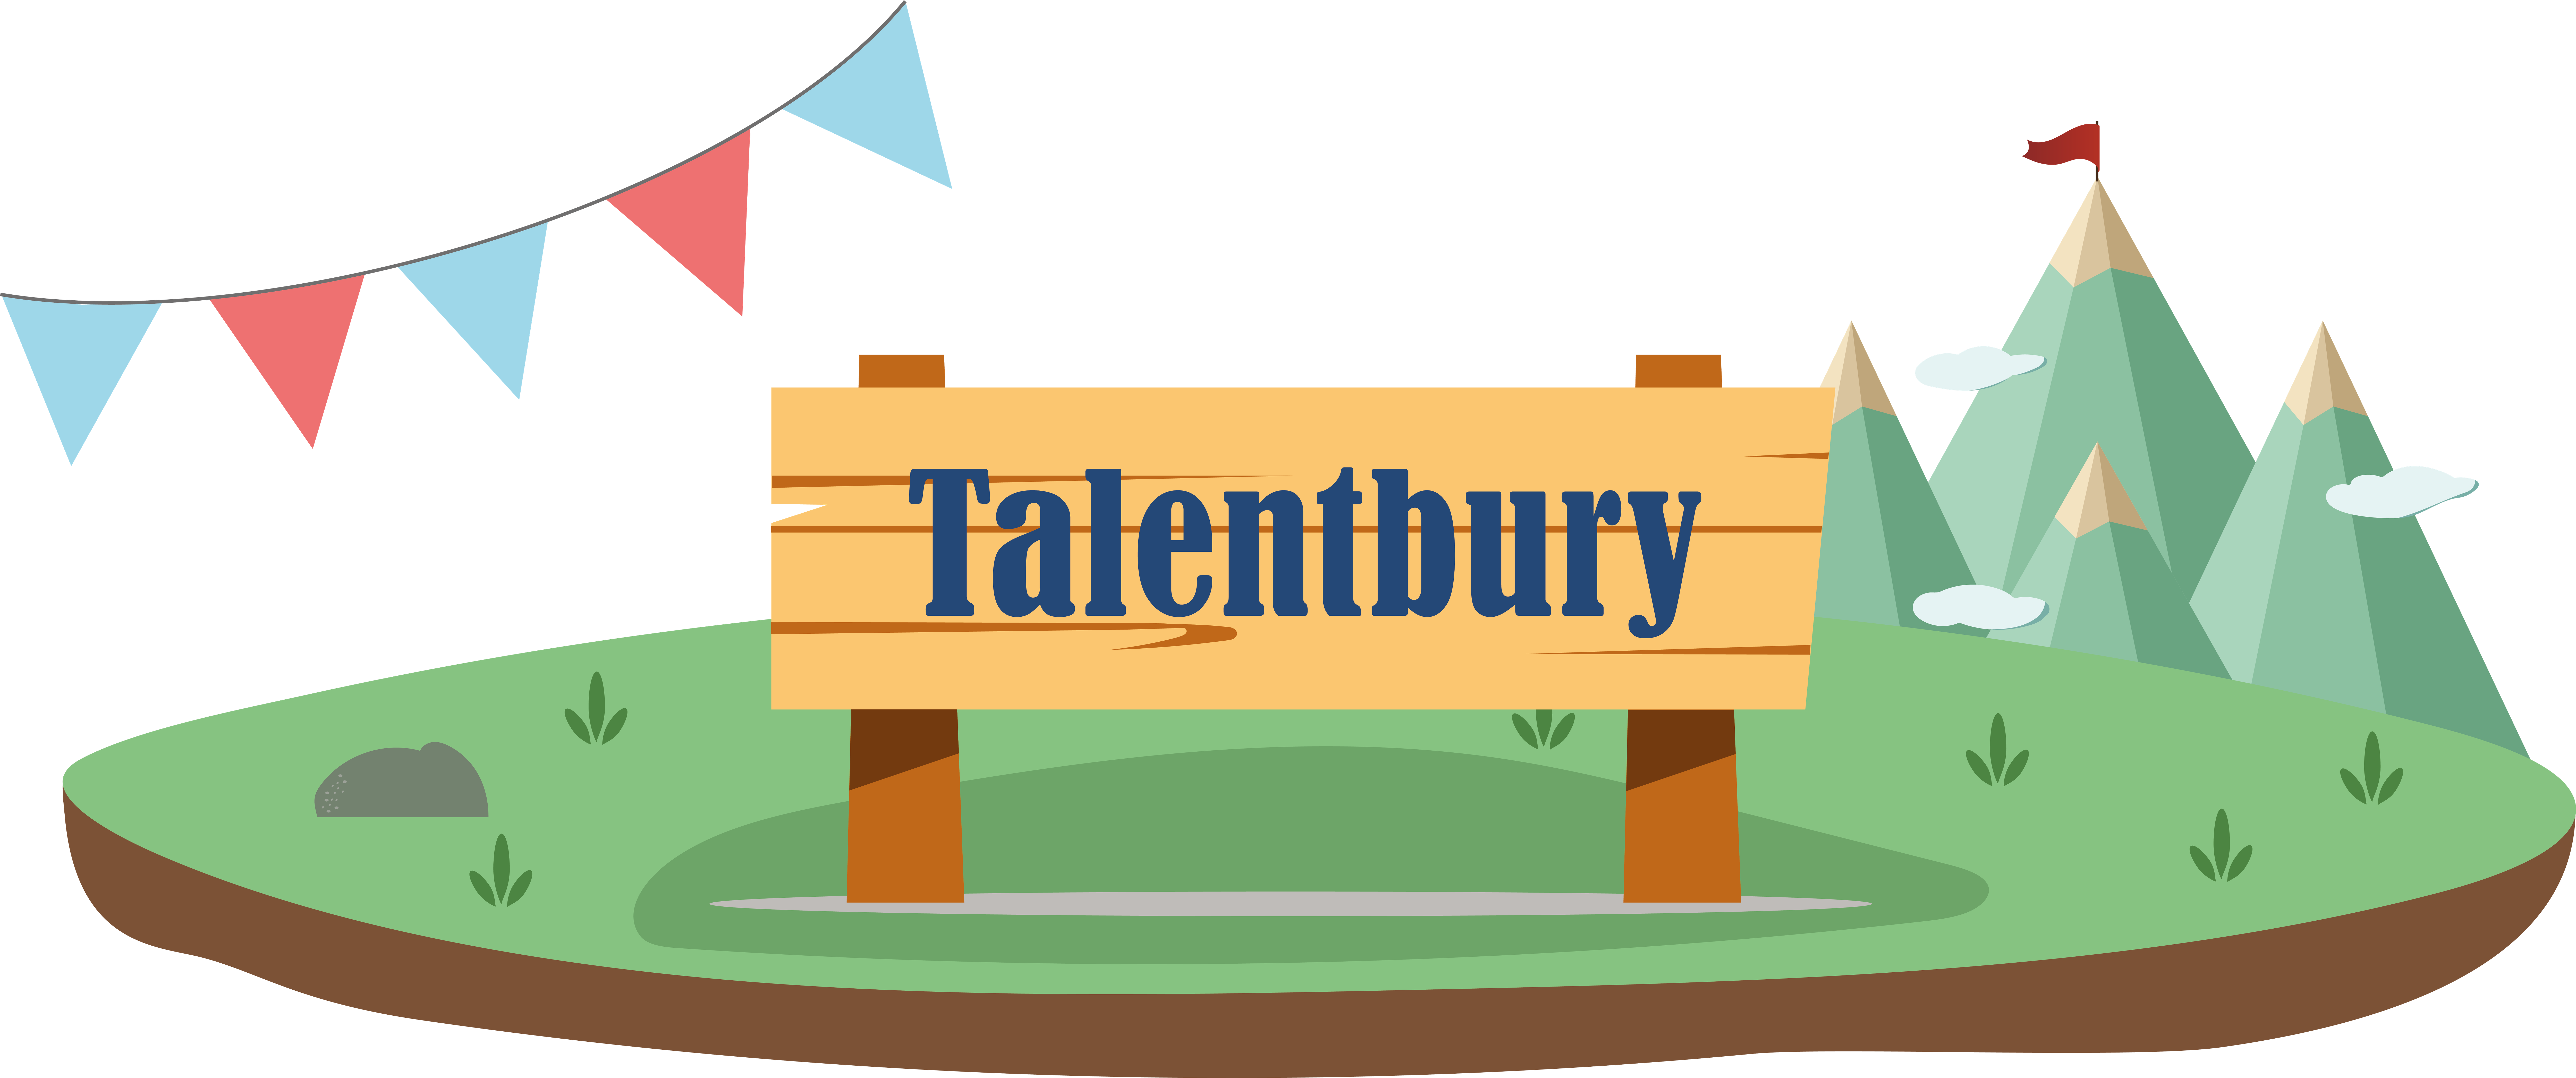 Talentbury Festival sign